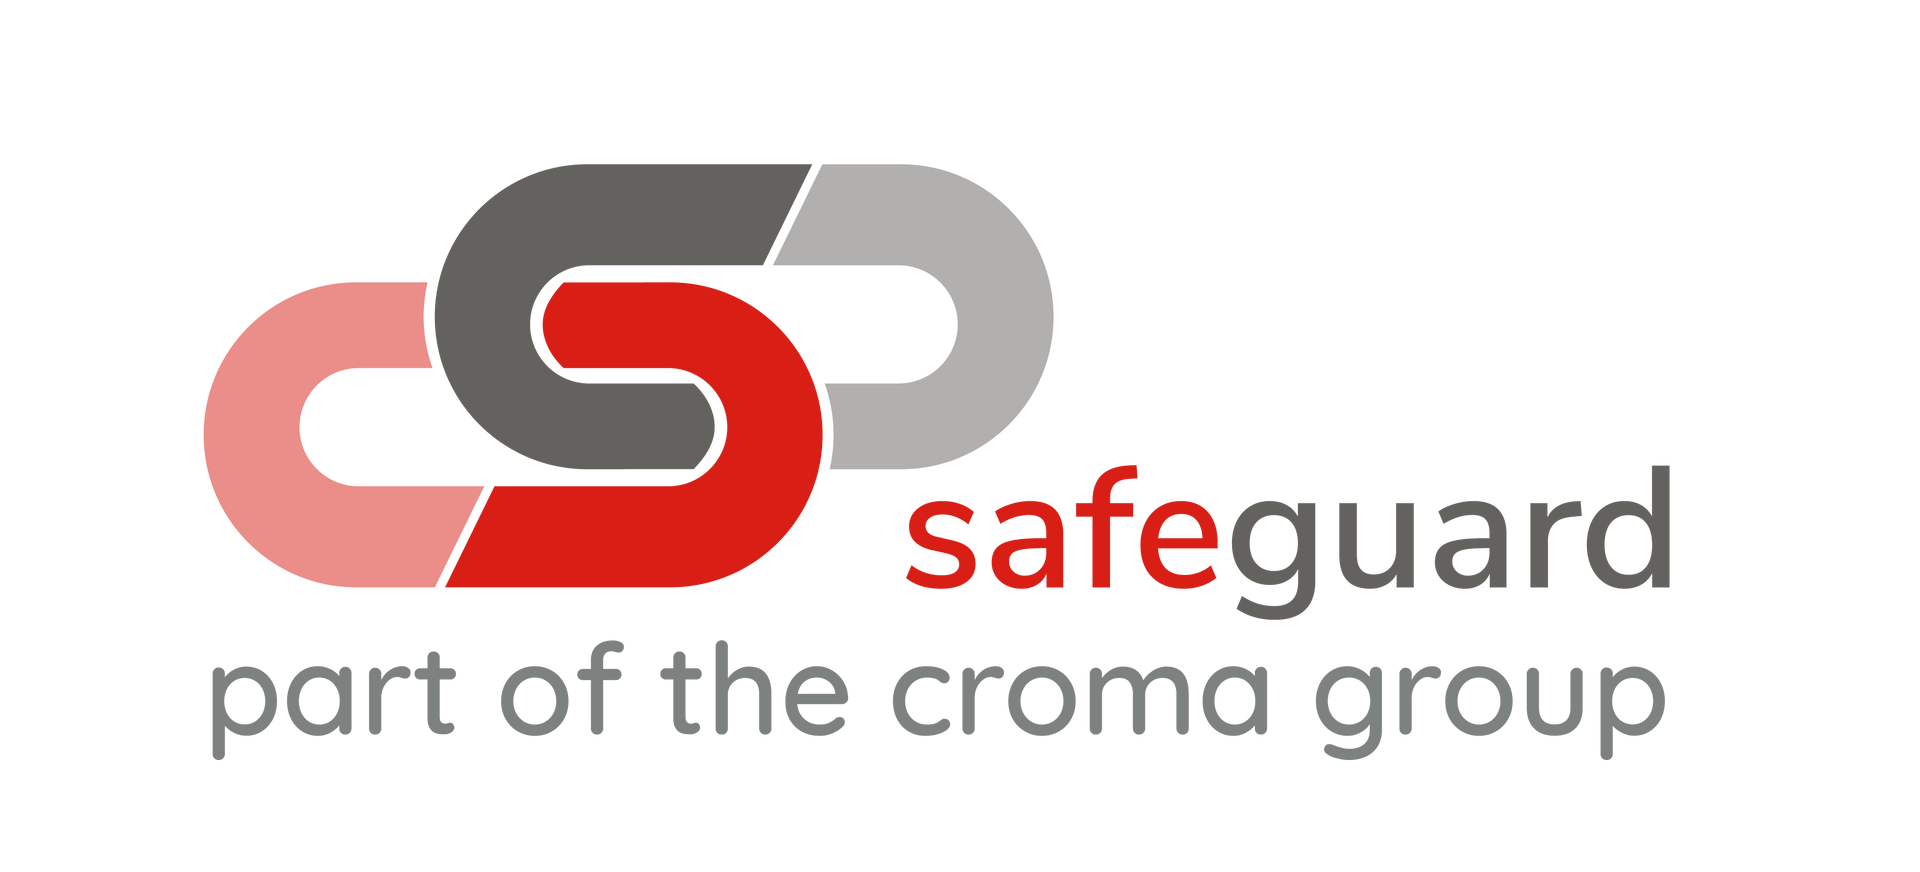 Safeguard company logo